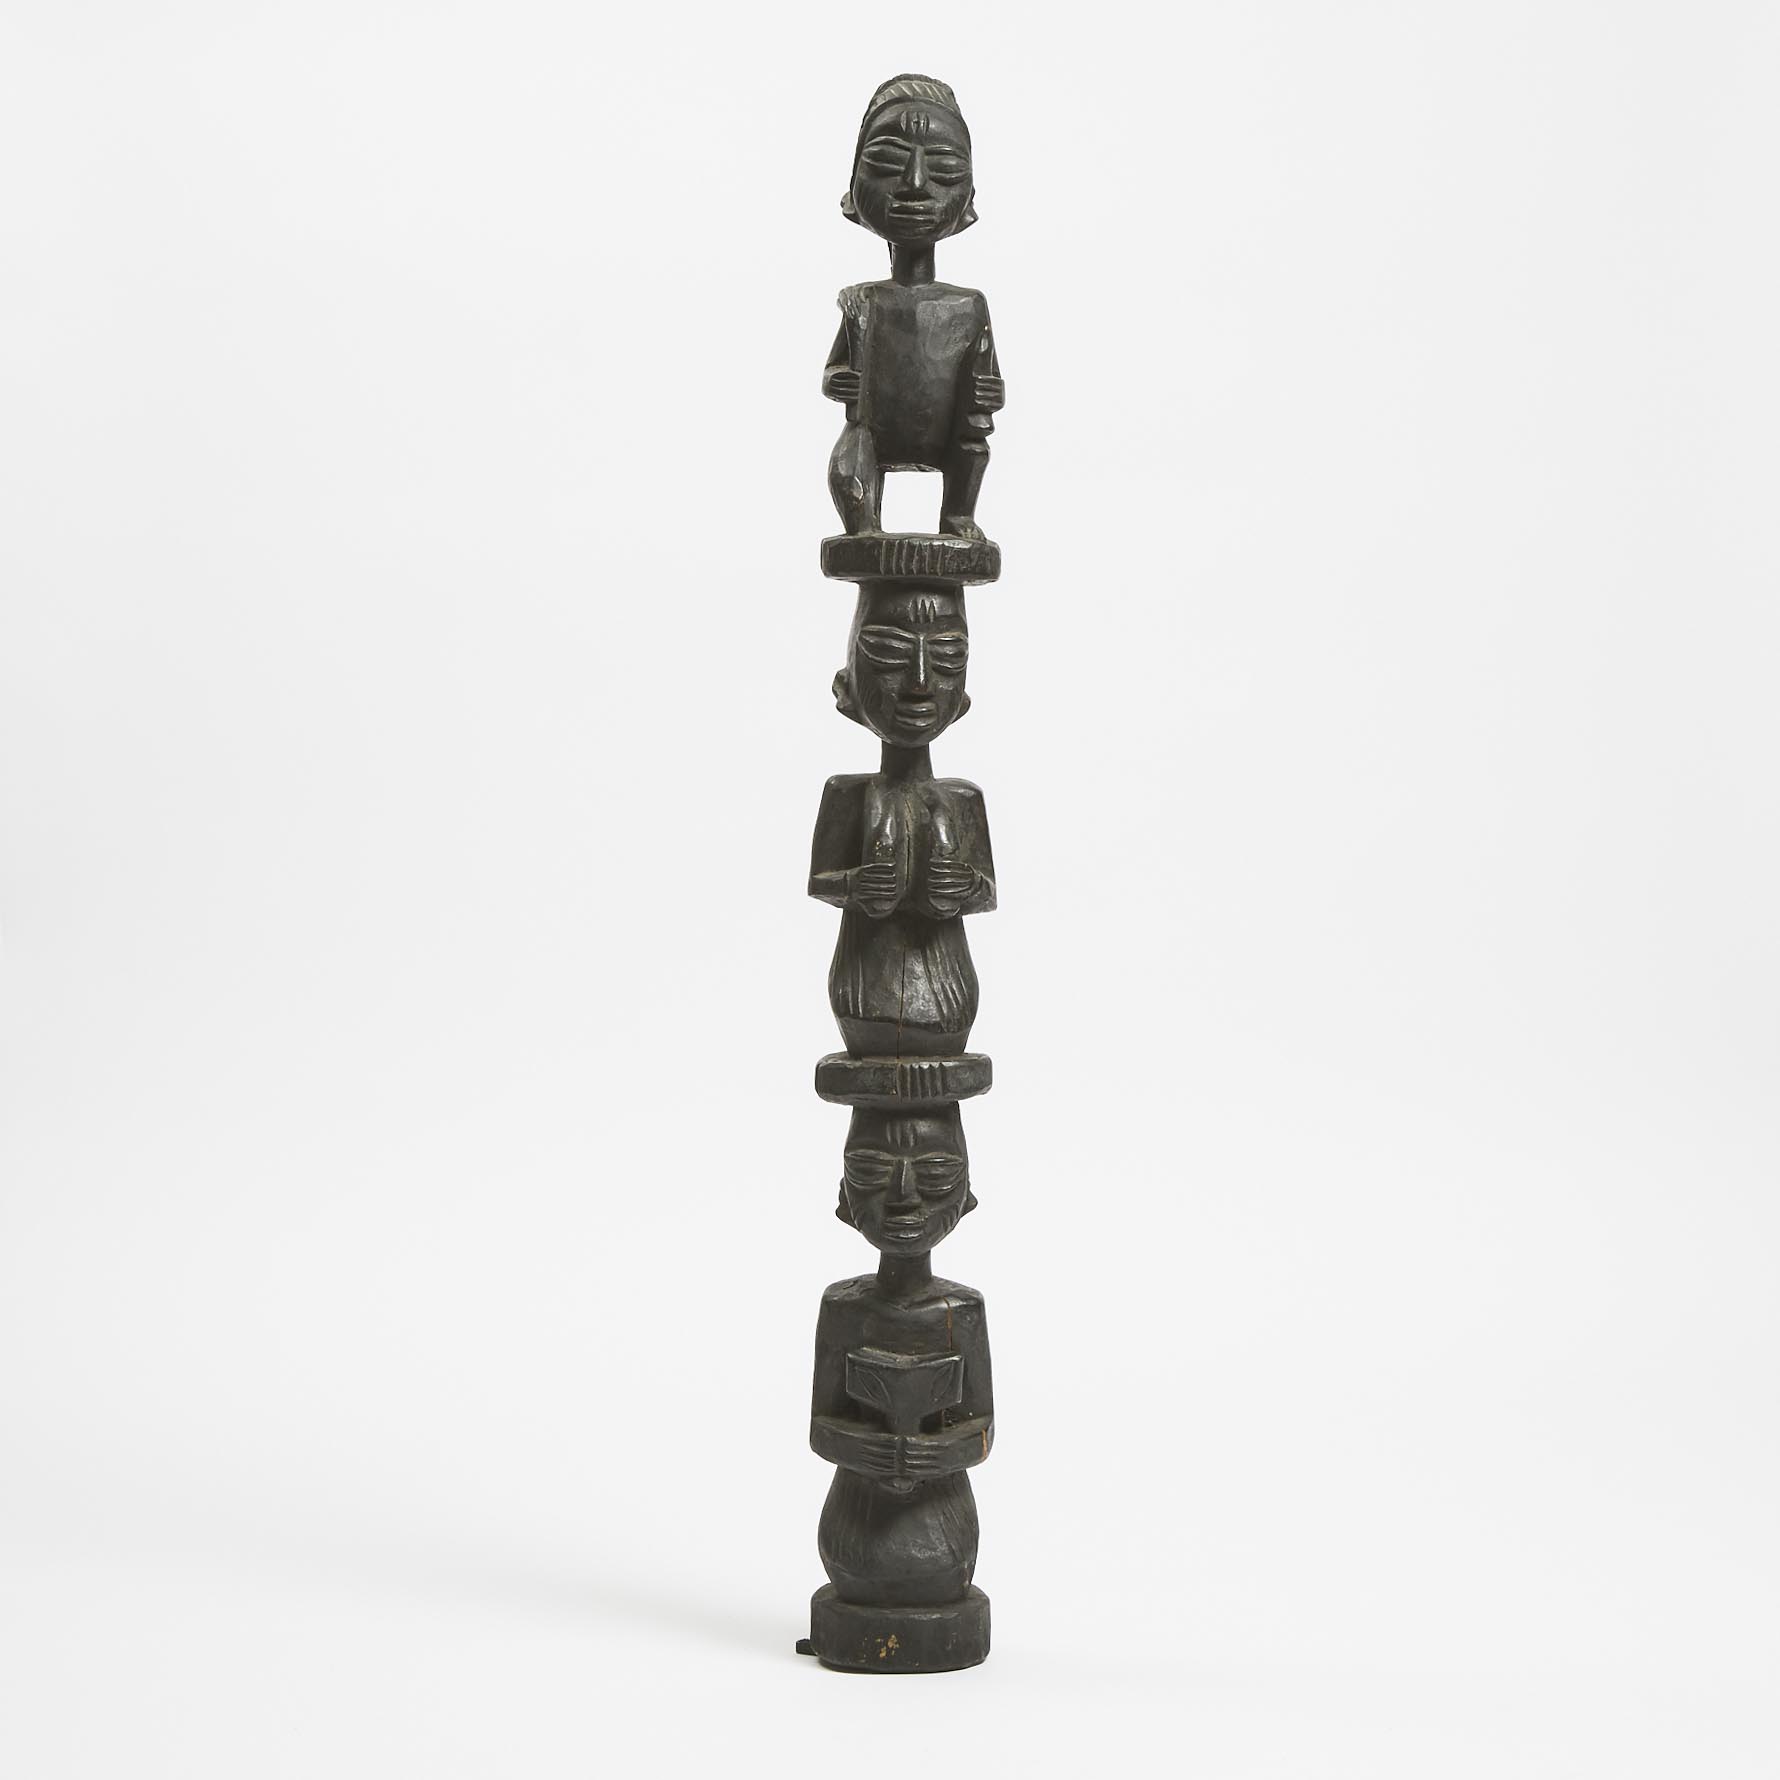 Yoruba Figural Totem, Nigeria, West Africa, mid to late 20th century